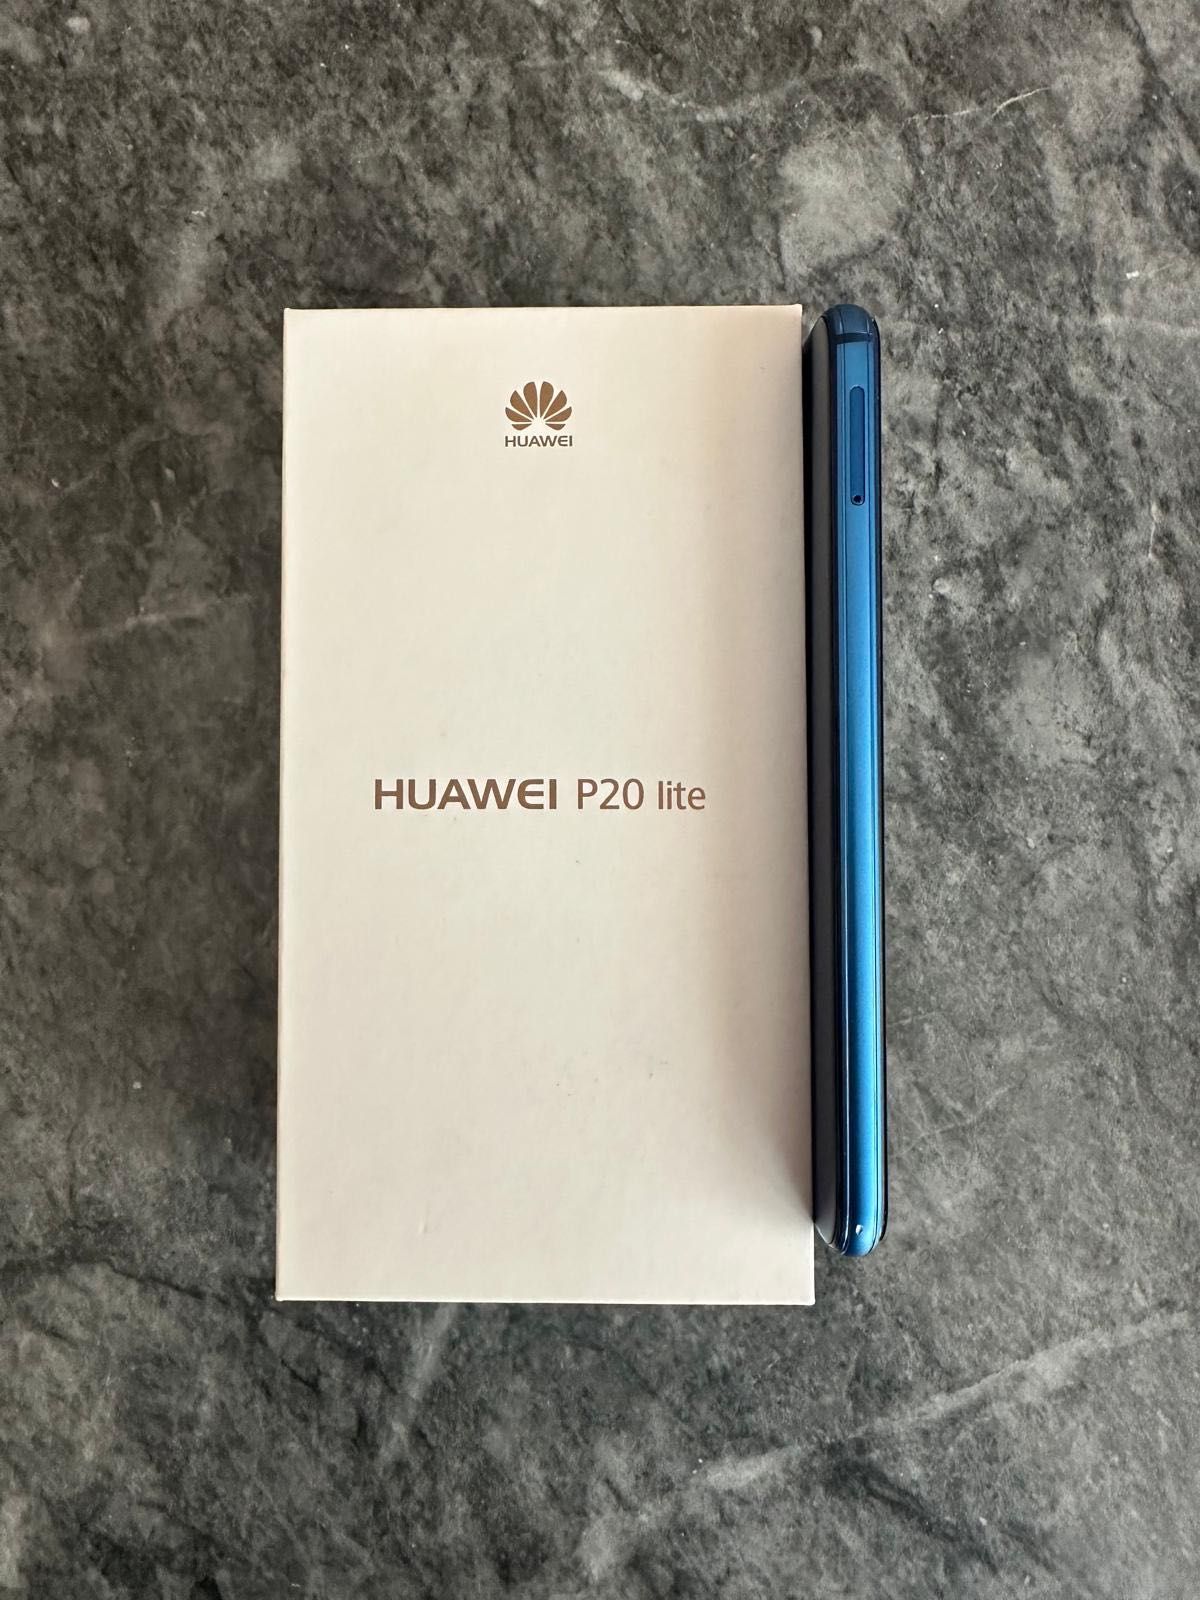 Huawei P20 lite.